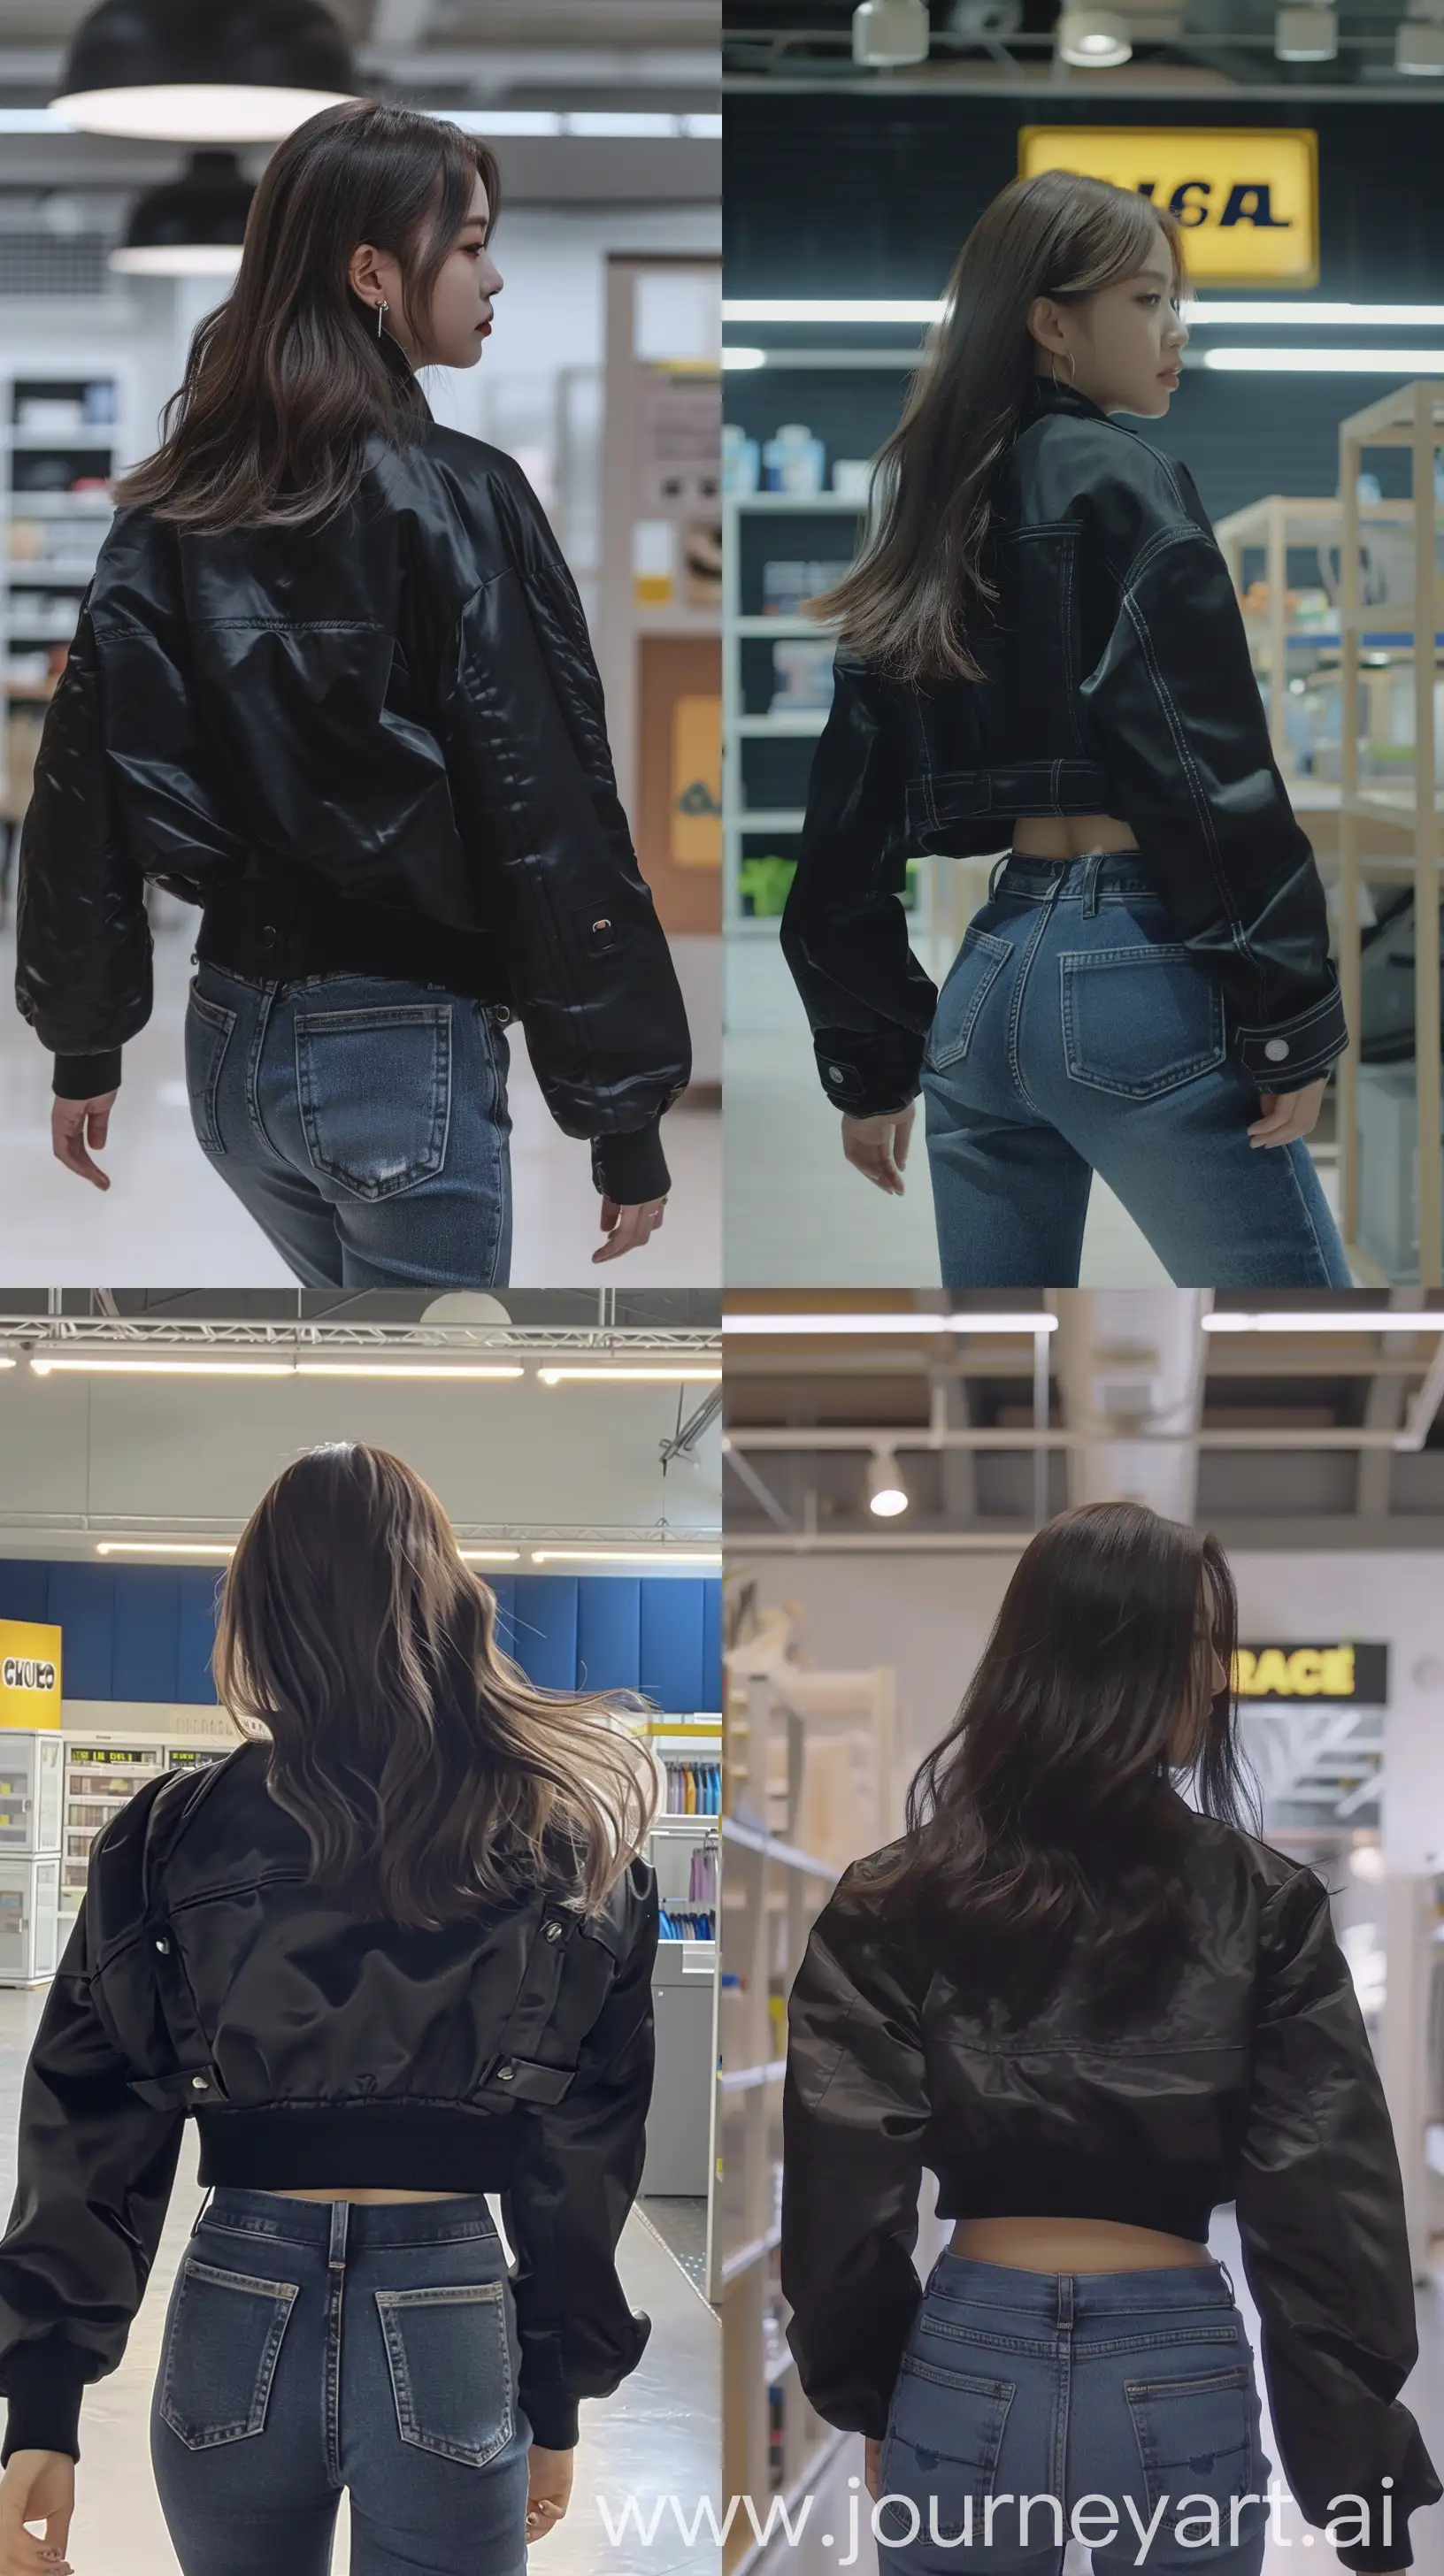 aestethic snapchat, blackpink's jennie wearing black jacket and jeans pants, medium hair, walking inside ikea, back body, throw face away --ar 9:16